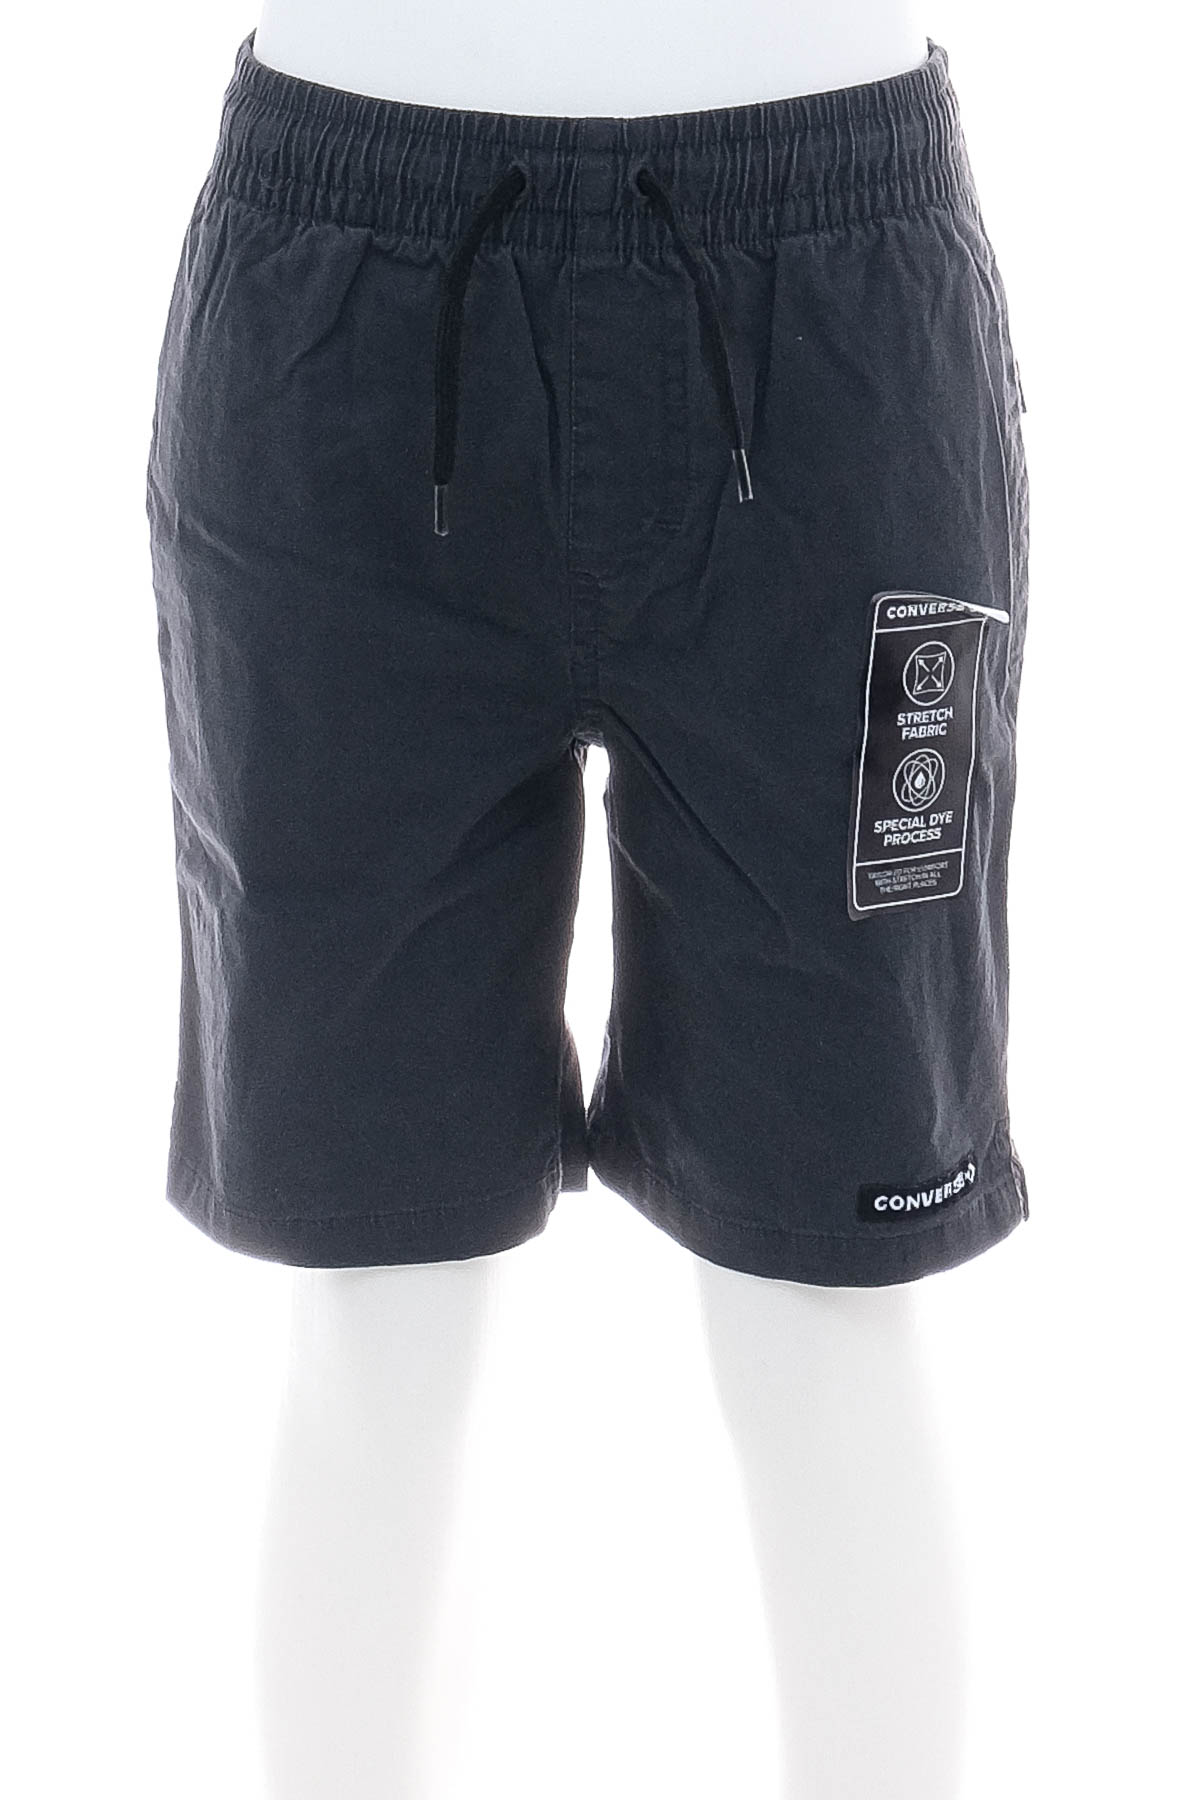 Shorts for boys - Converse - 0